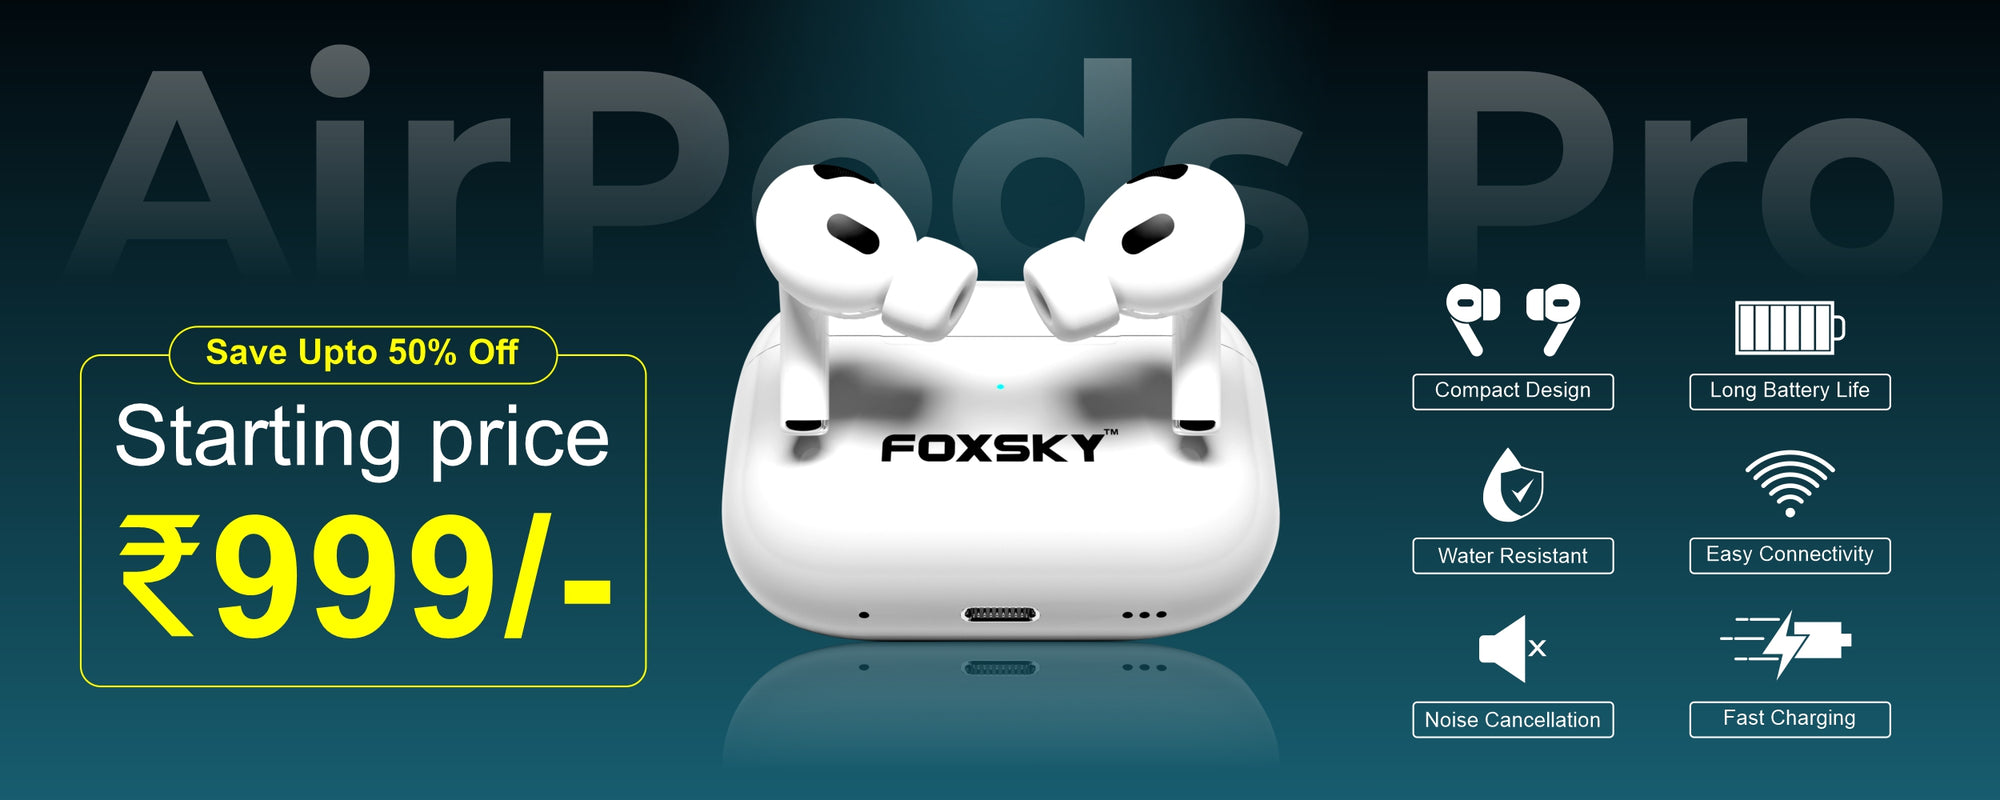 Foxsky Airpods Pro